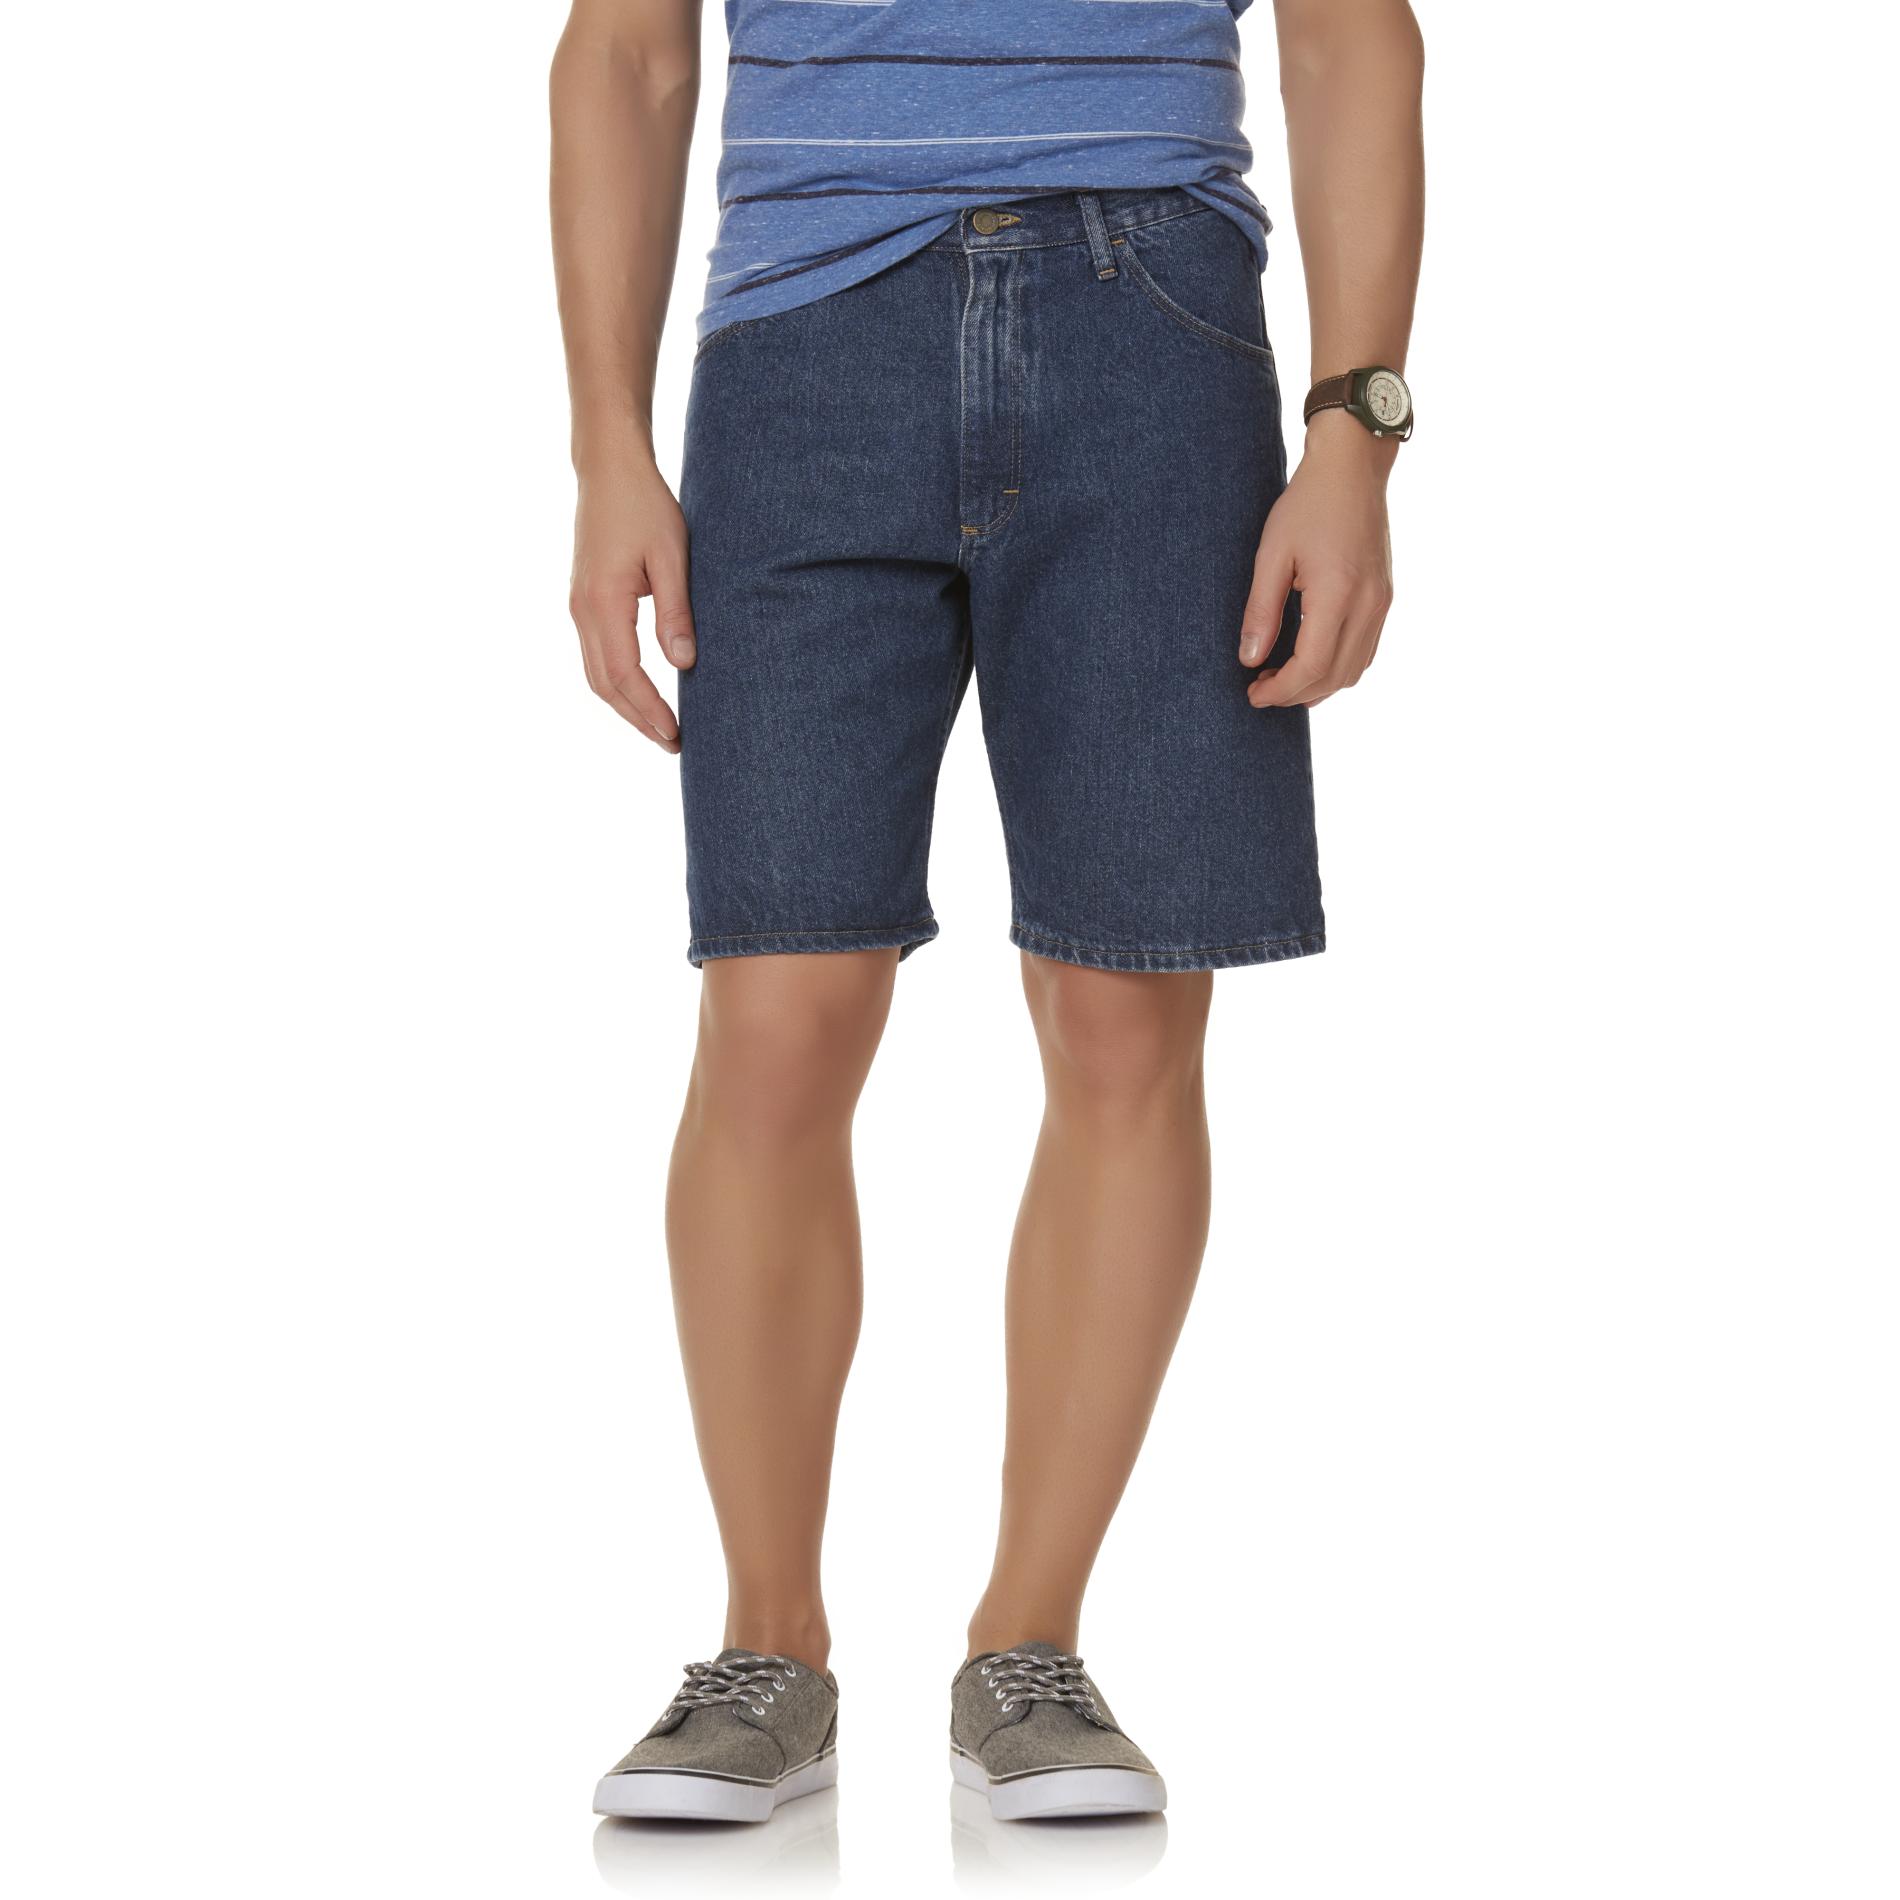 Wrangler Men's Jean Shorts